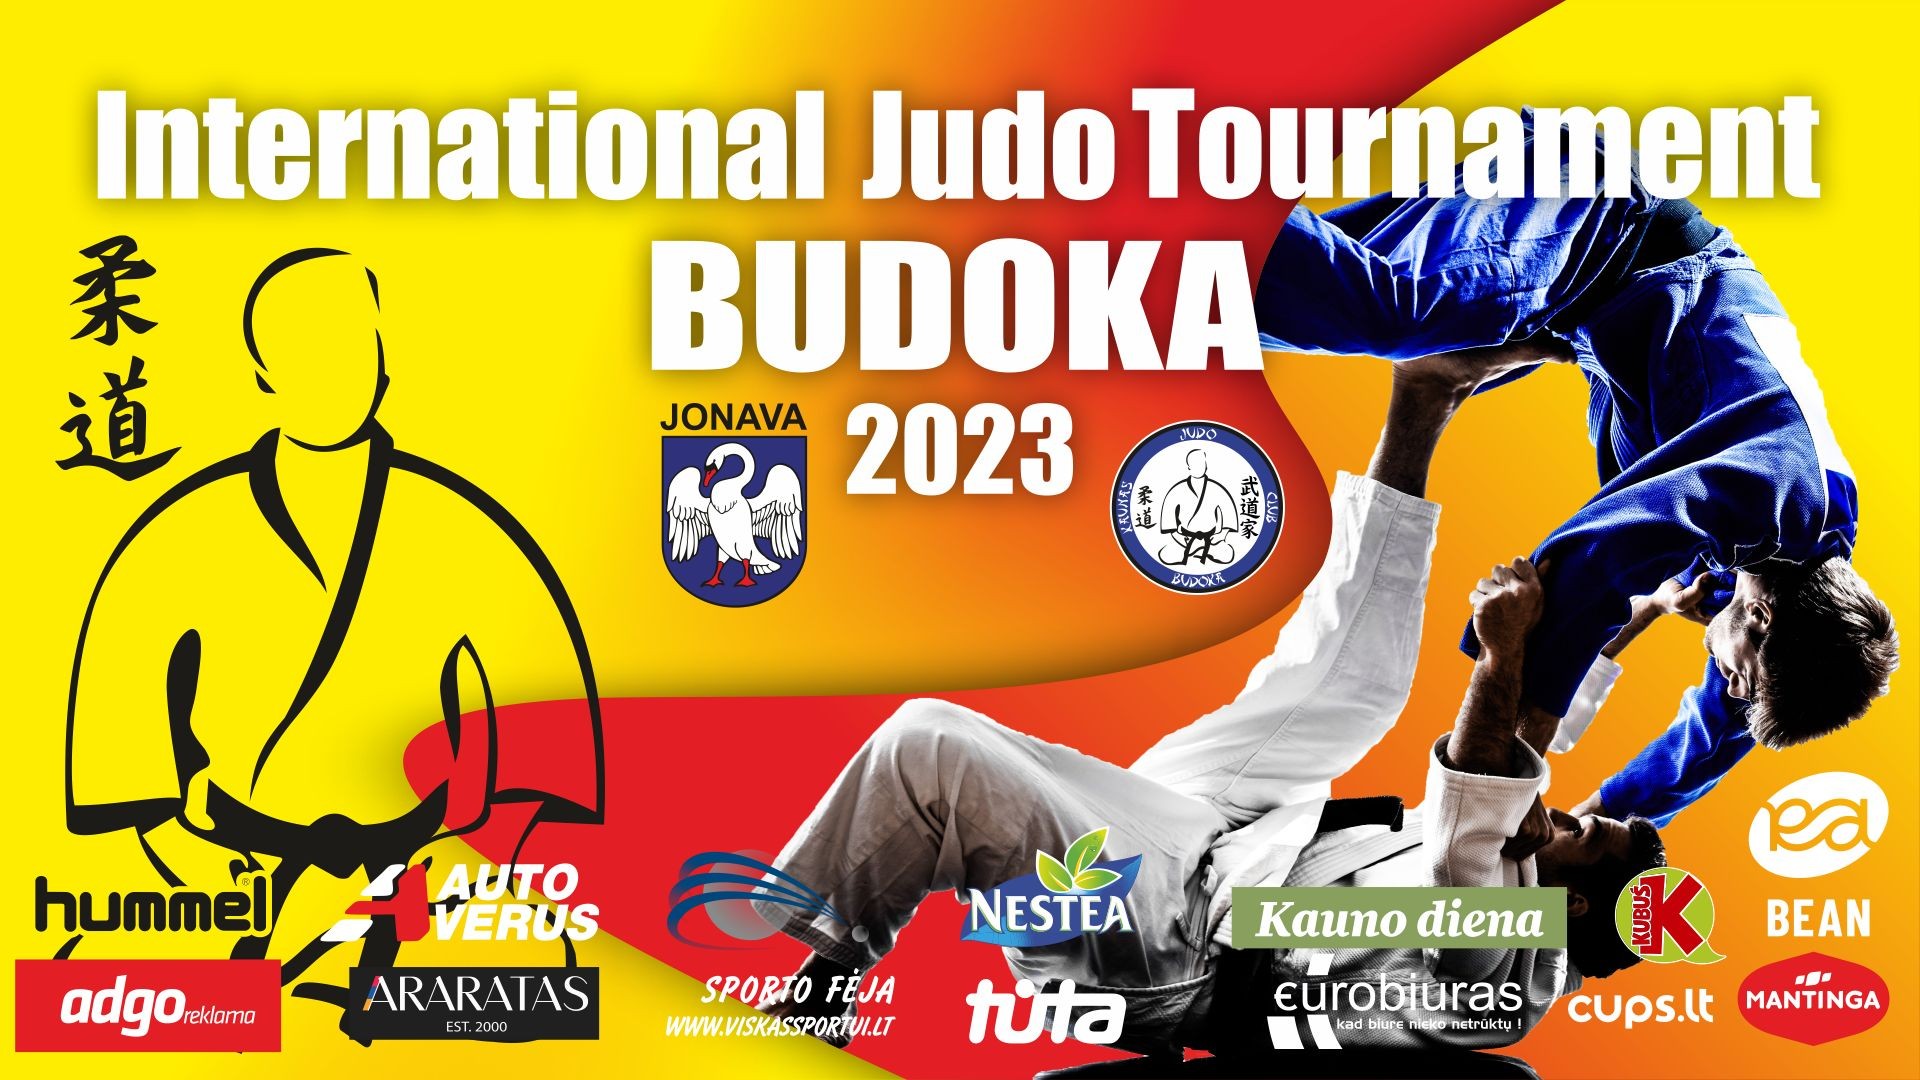 Tatami 5 - INTERNATIONAL JUDO CLUB BUDOKA TOURNAMENT 2023